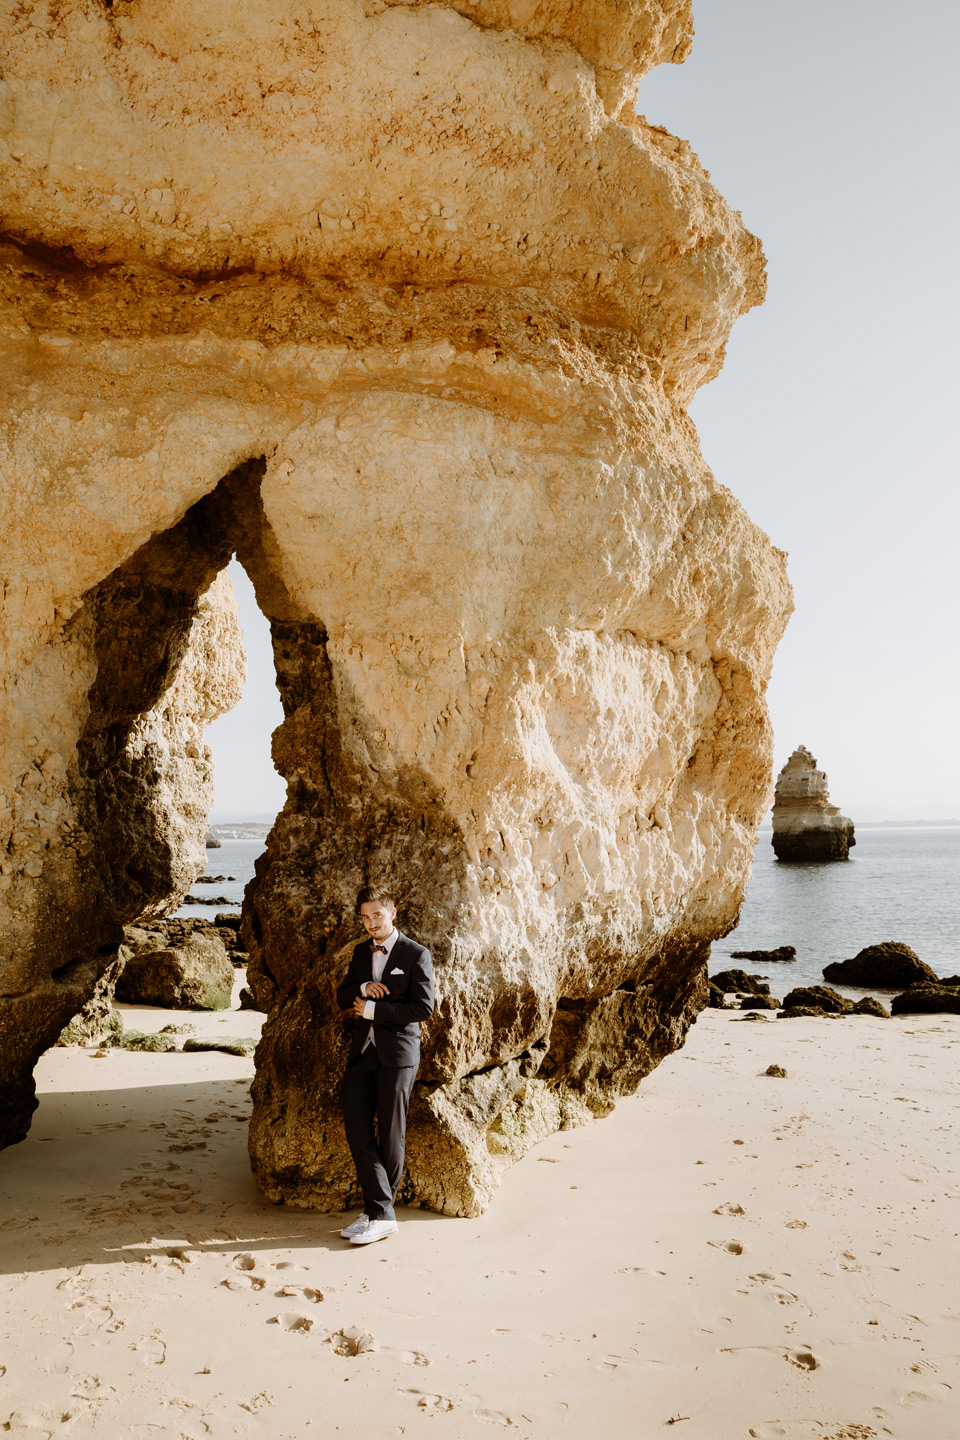 Wedding shoot in Portugal